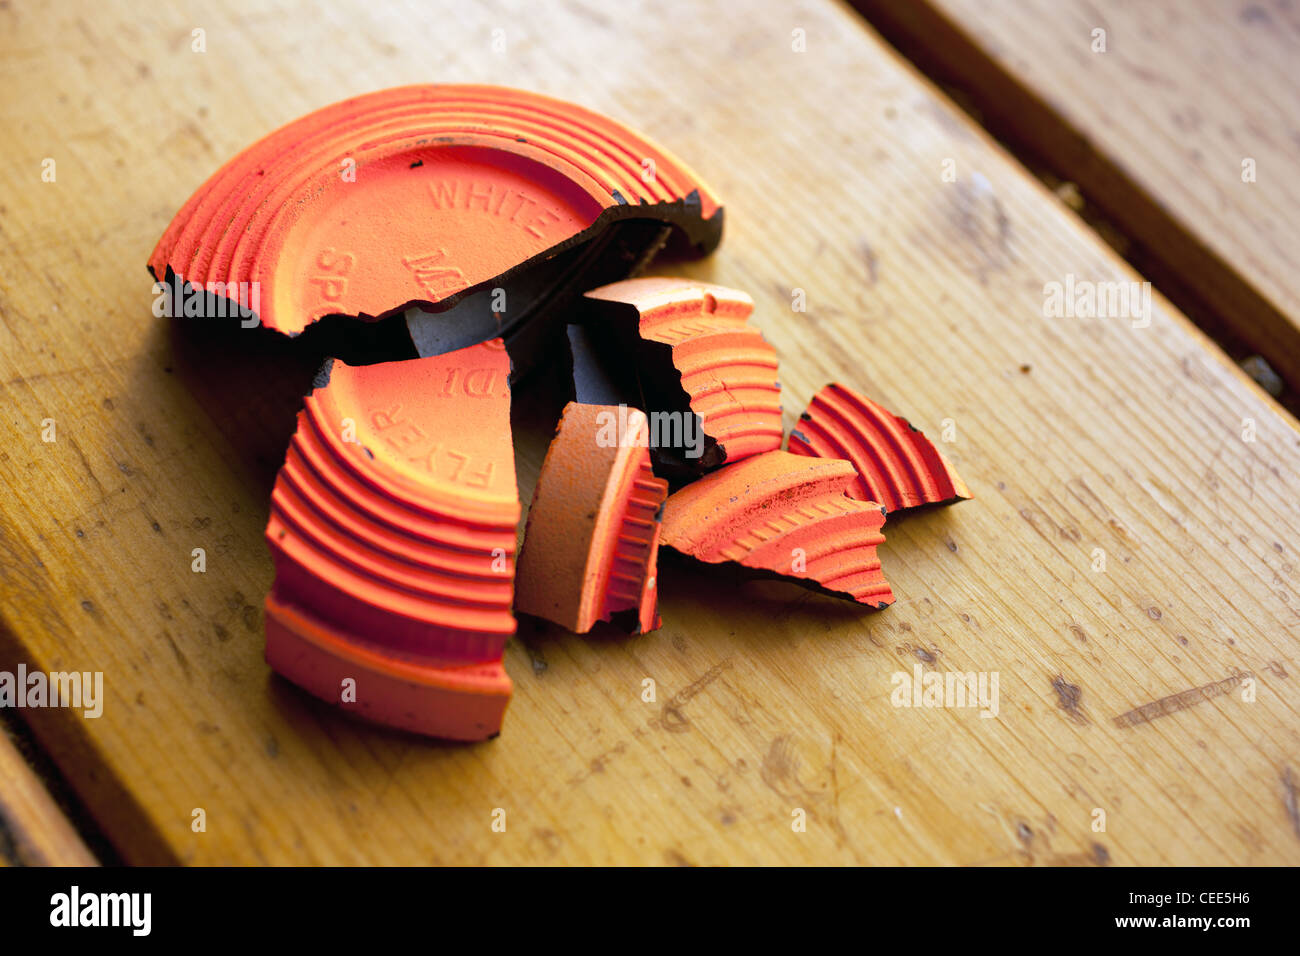 An orange clay target broken into pieces Stock Photo